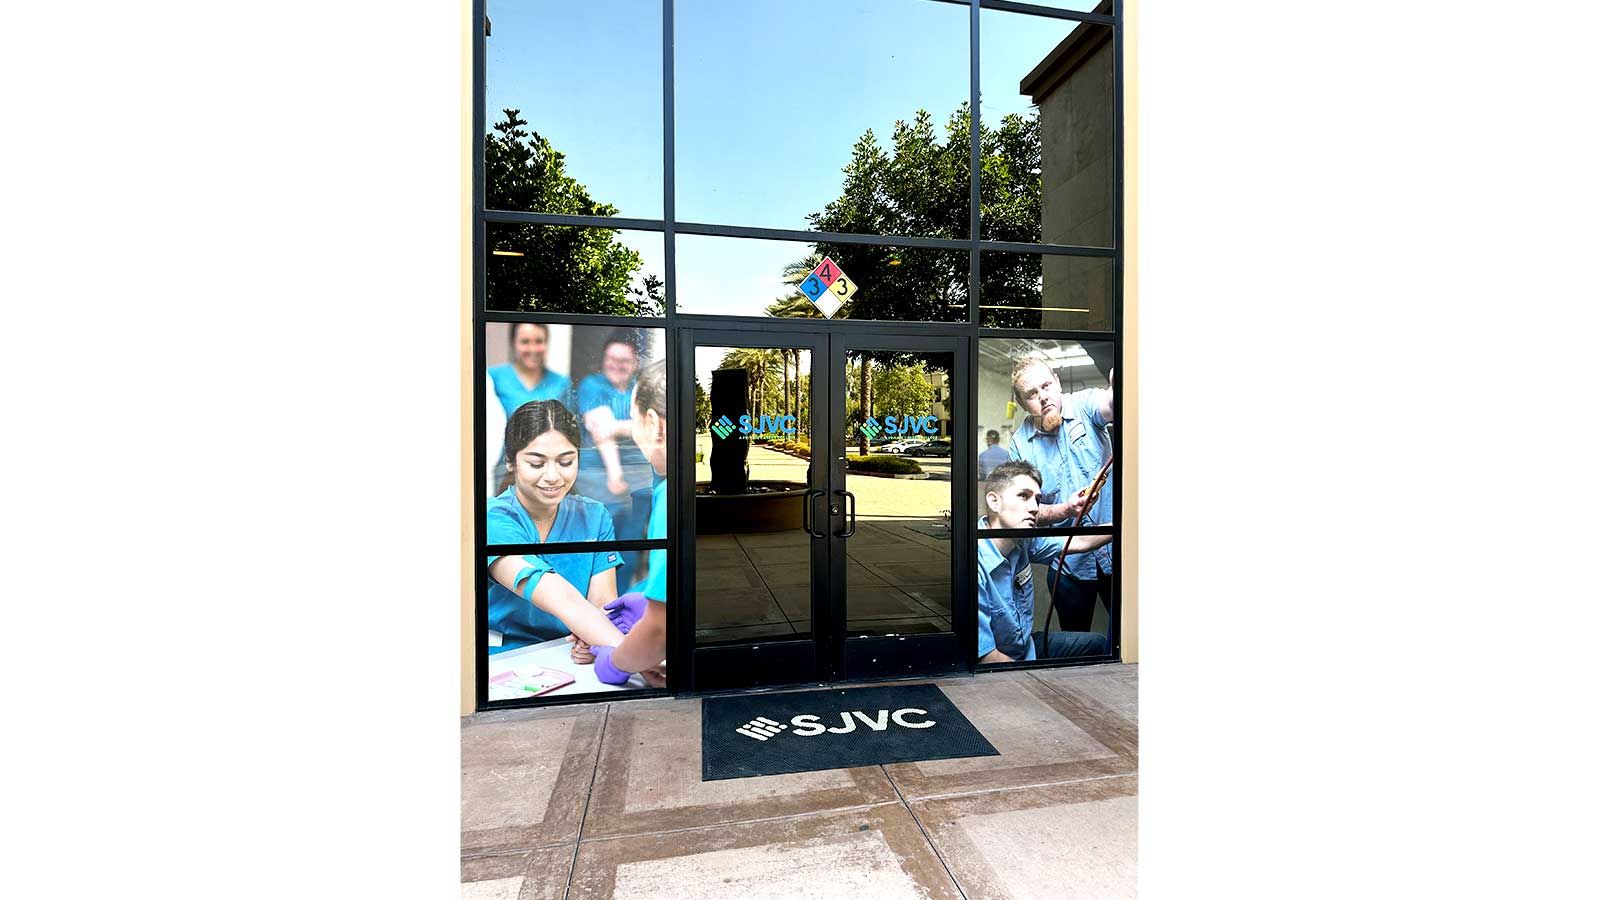 SJVC Ontario window decals attached to the doors